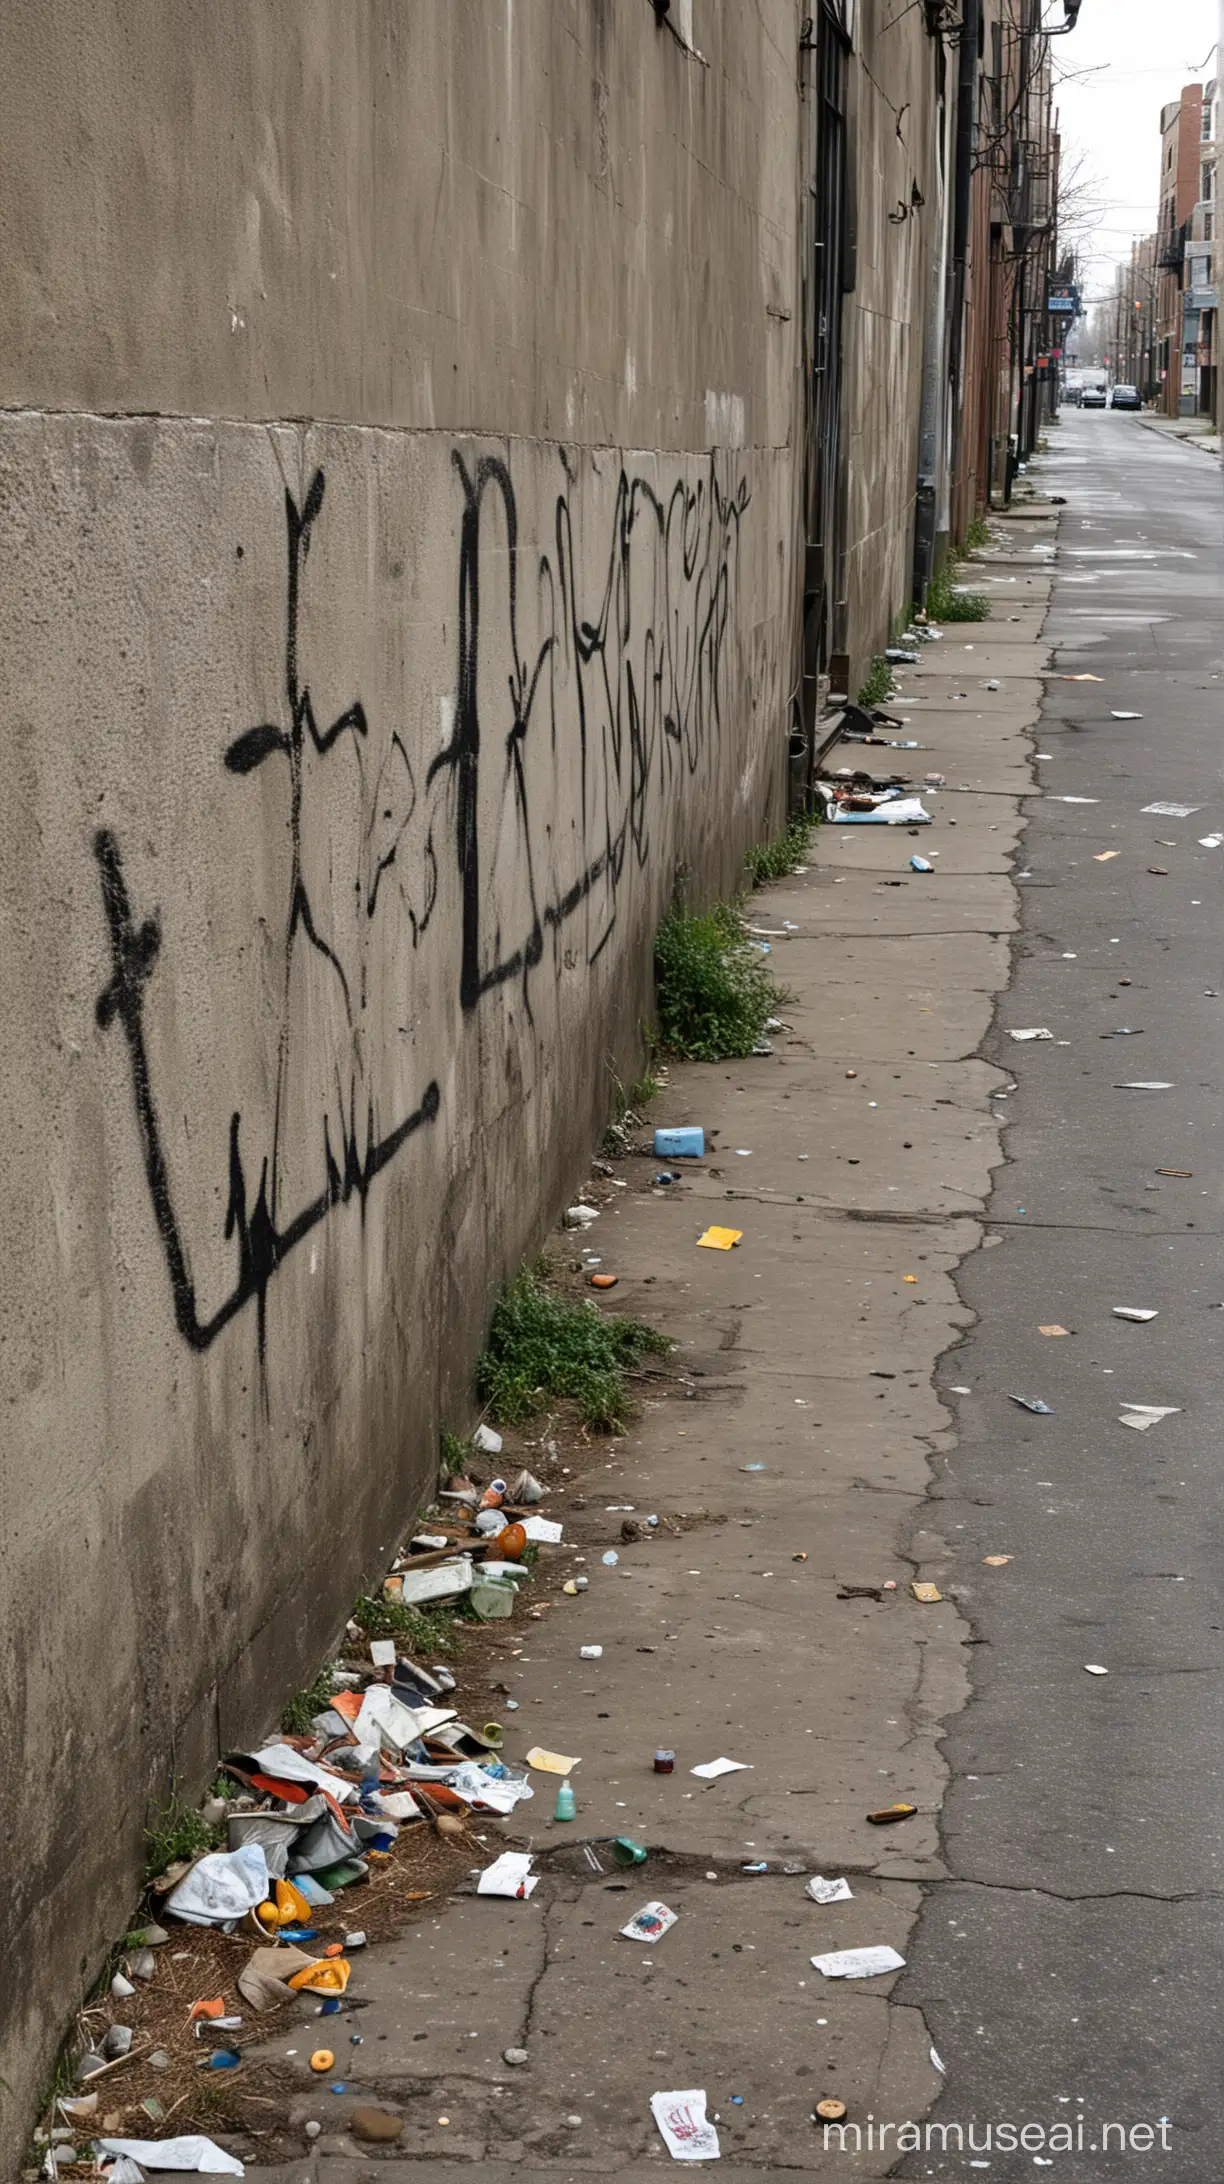  Run down city street poverty  vandalism graffiti at duck